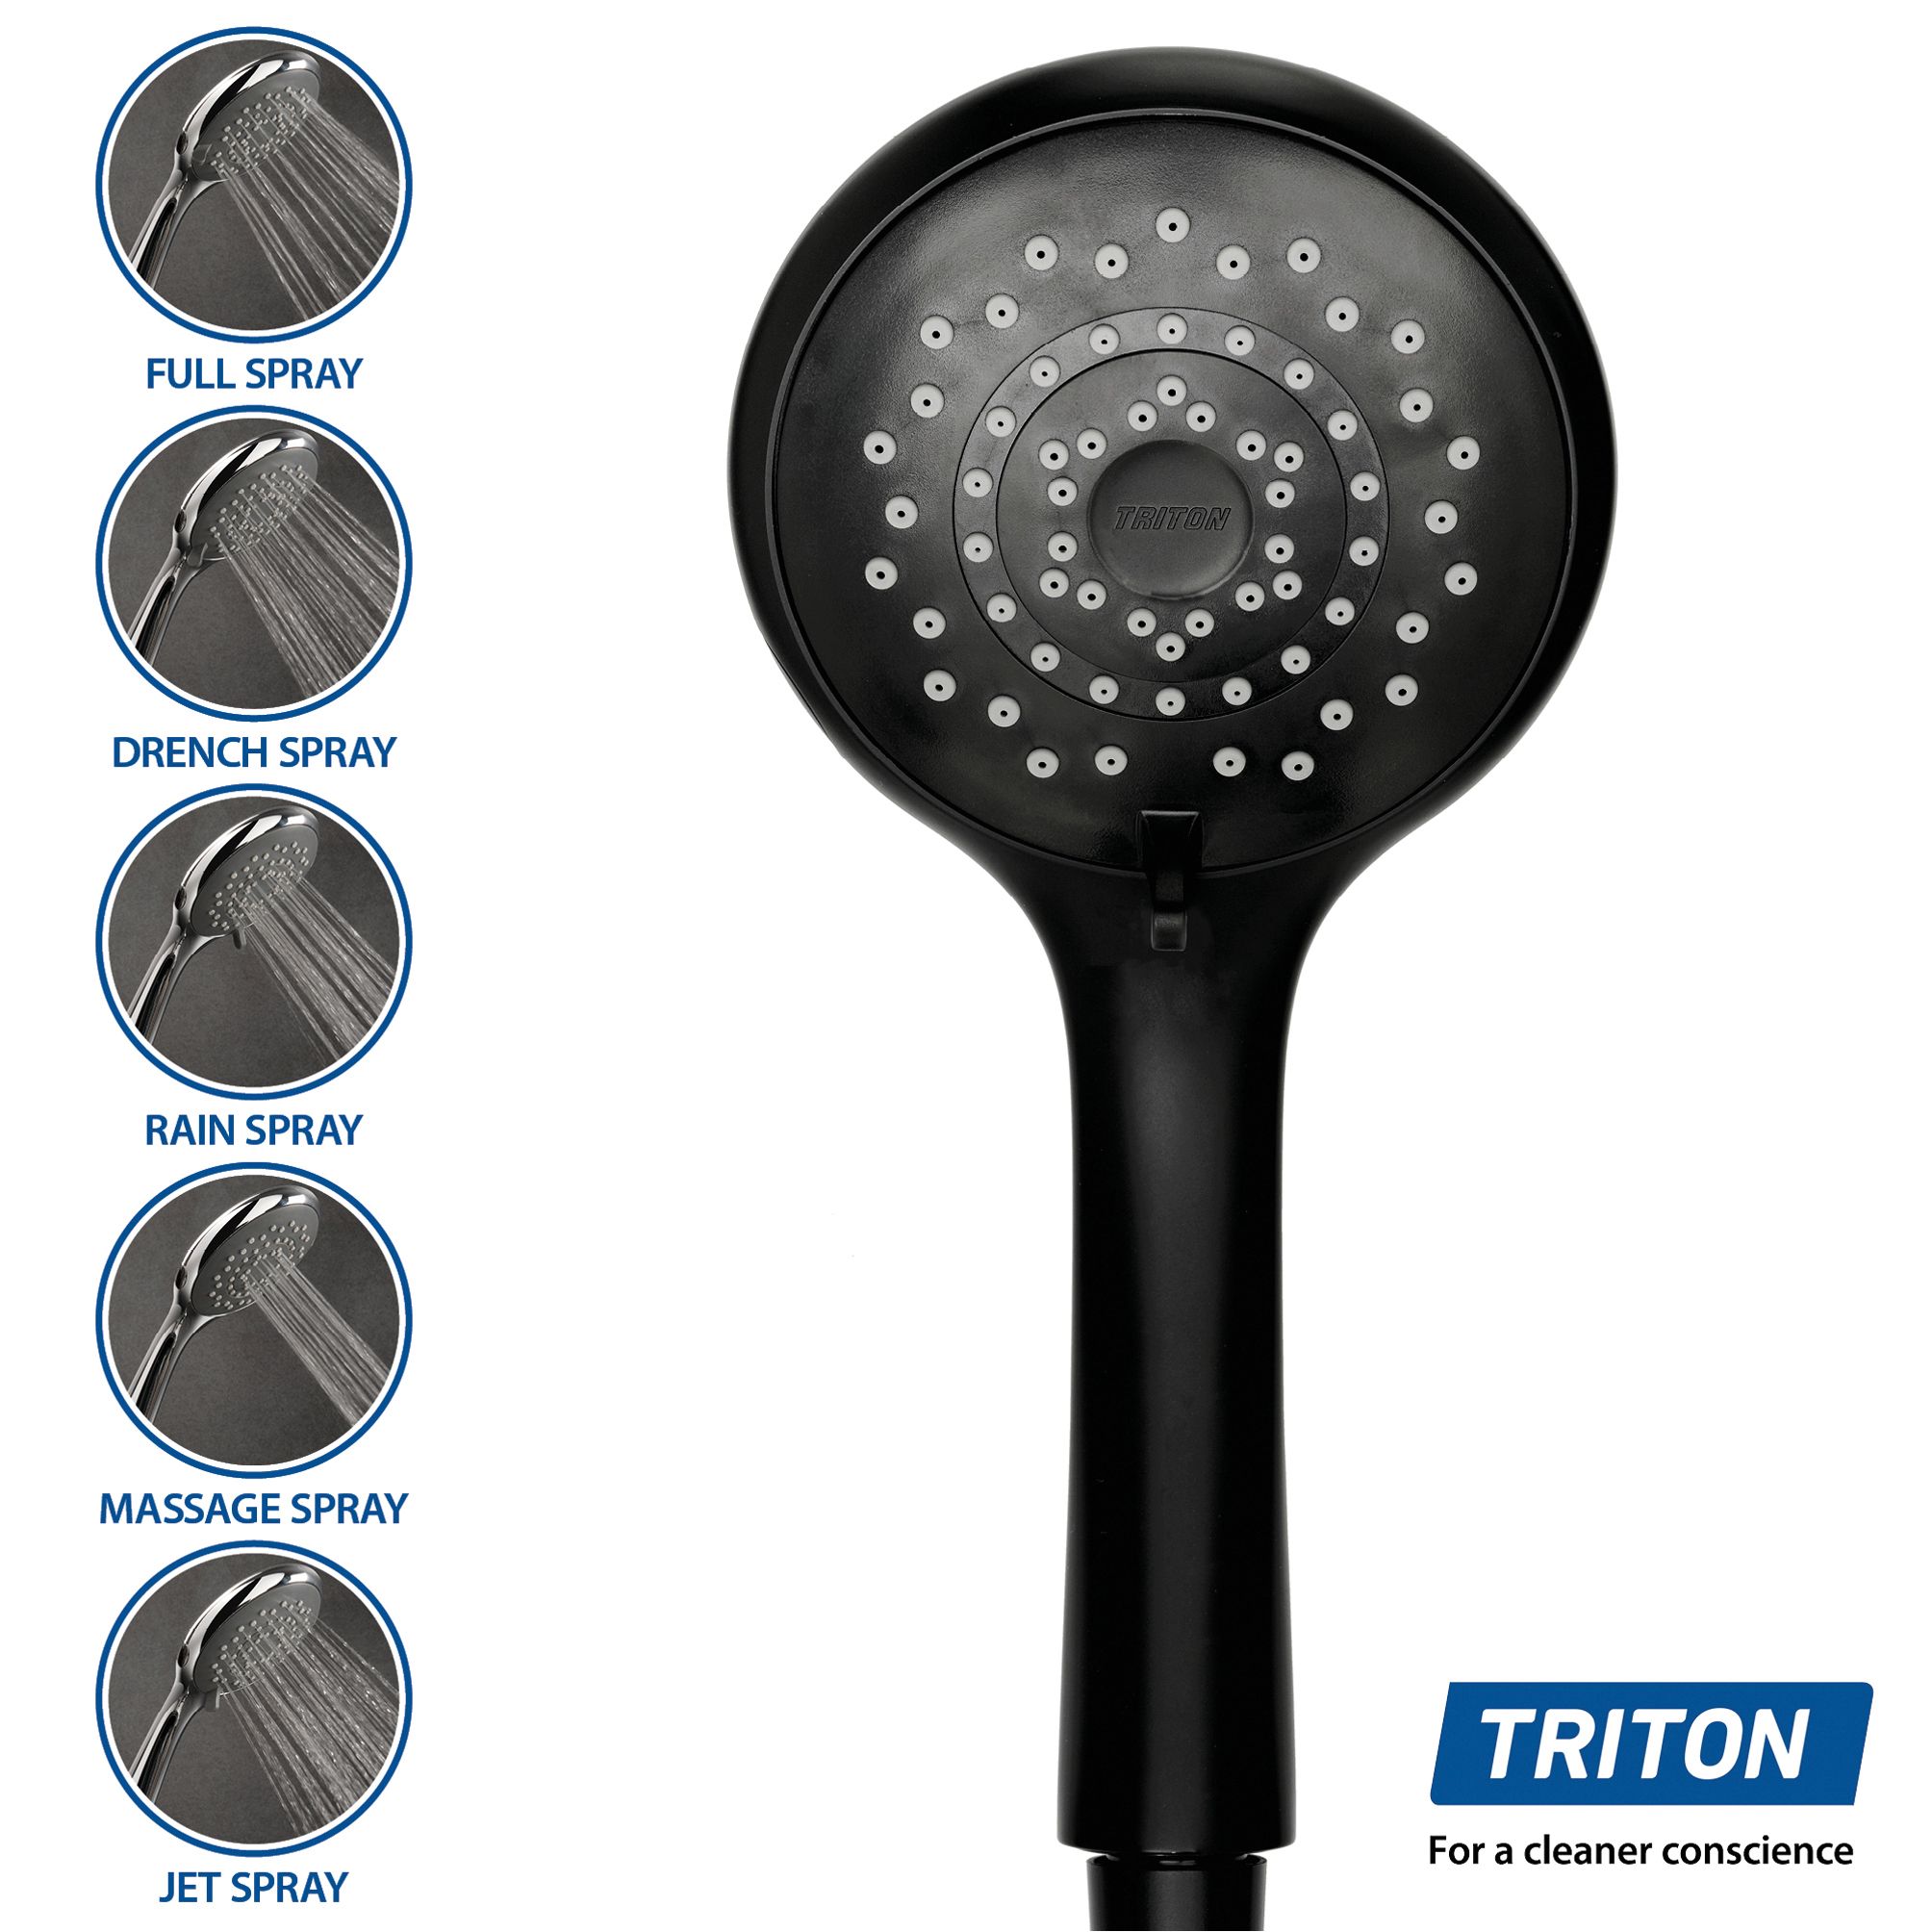 Triton Benito Matt Black Brushed steel effect Wall-mounted Thermostatic Mixer Shower